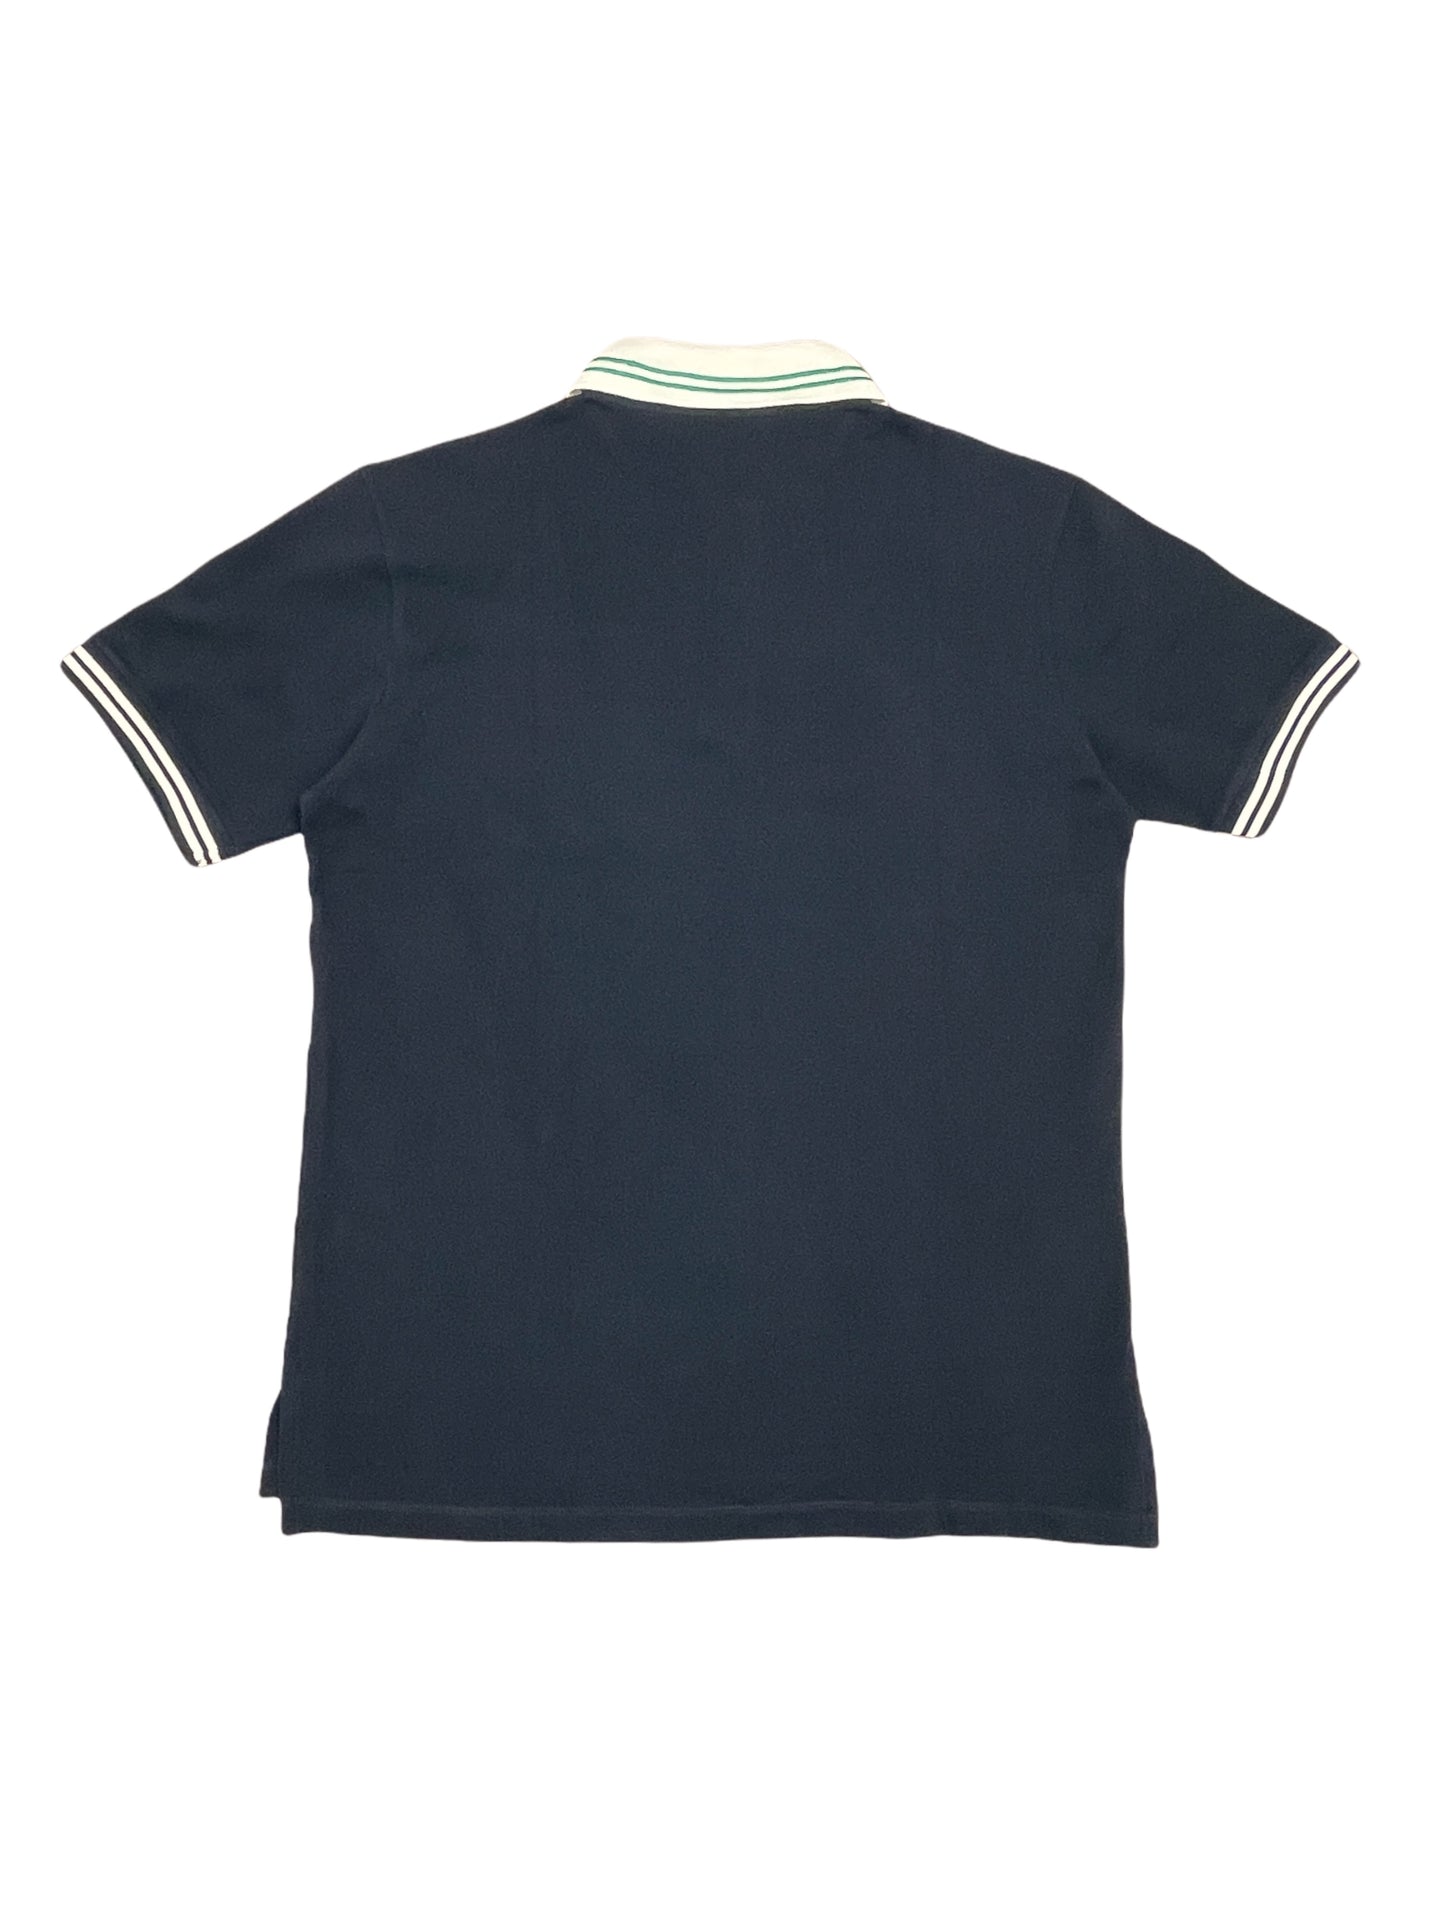 GUCCI Black & Cream Short Sleeve Polo Shirt - Large